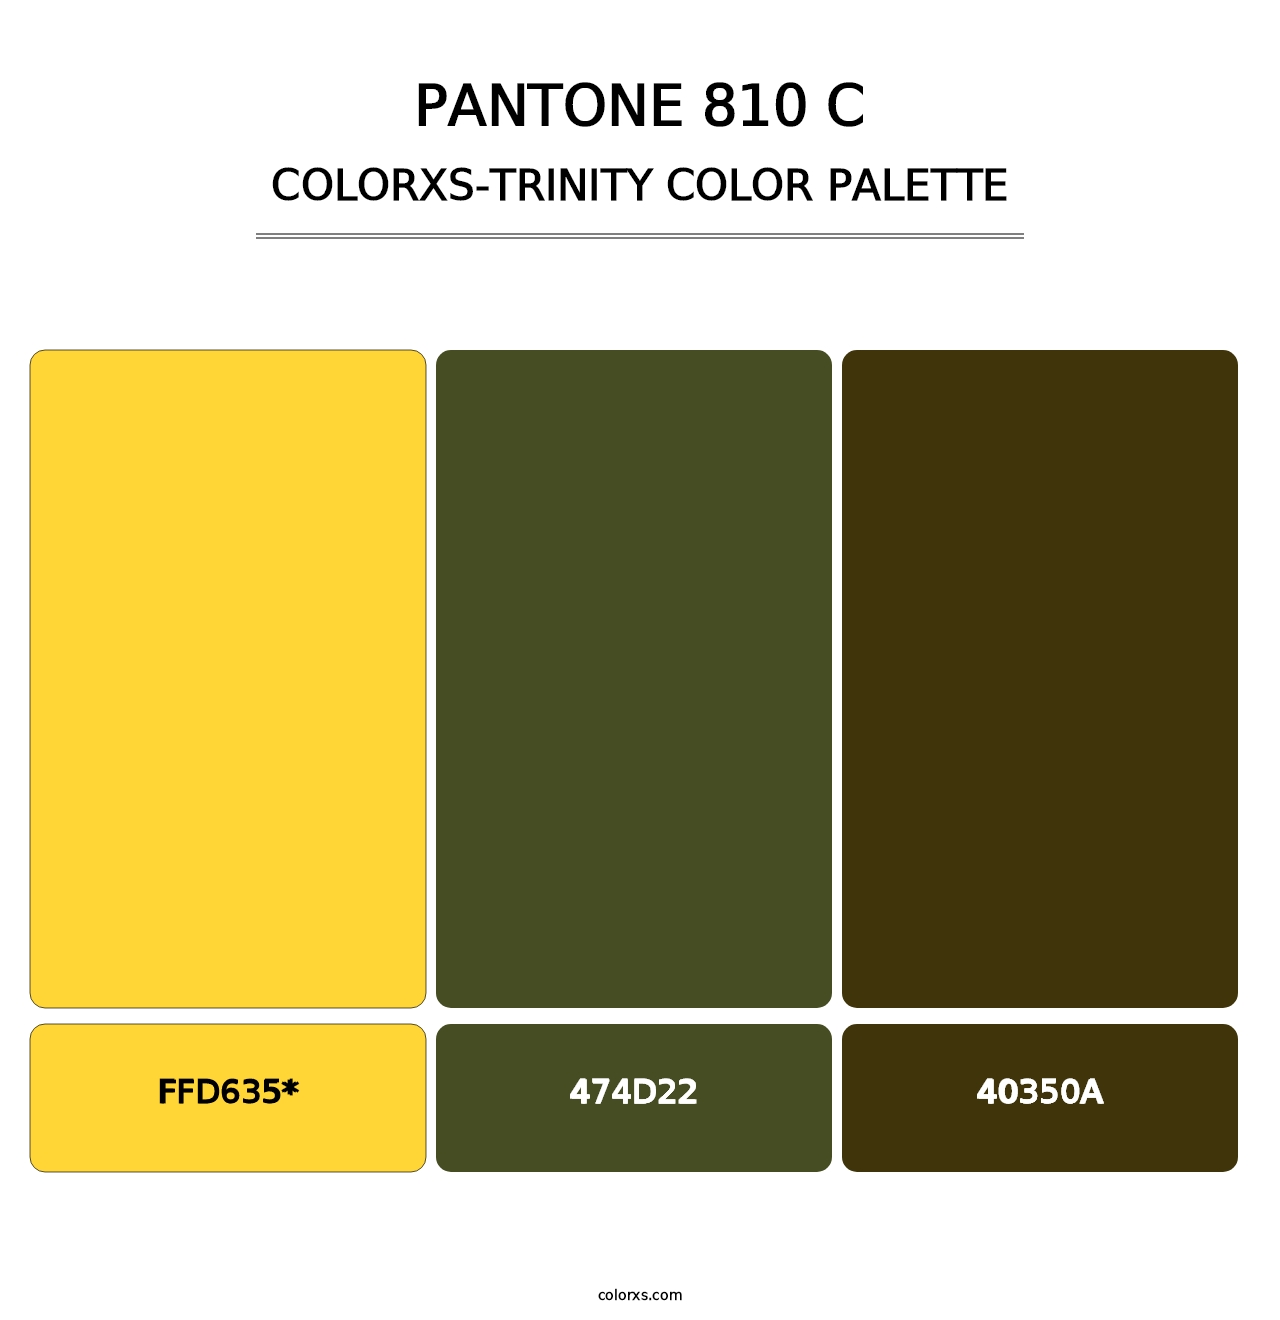 PANTONE 810 C - Colorxs Trinity Palette